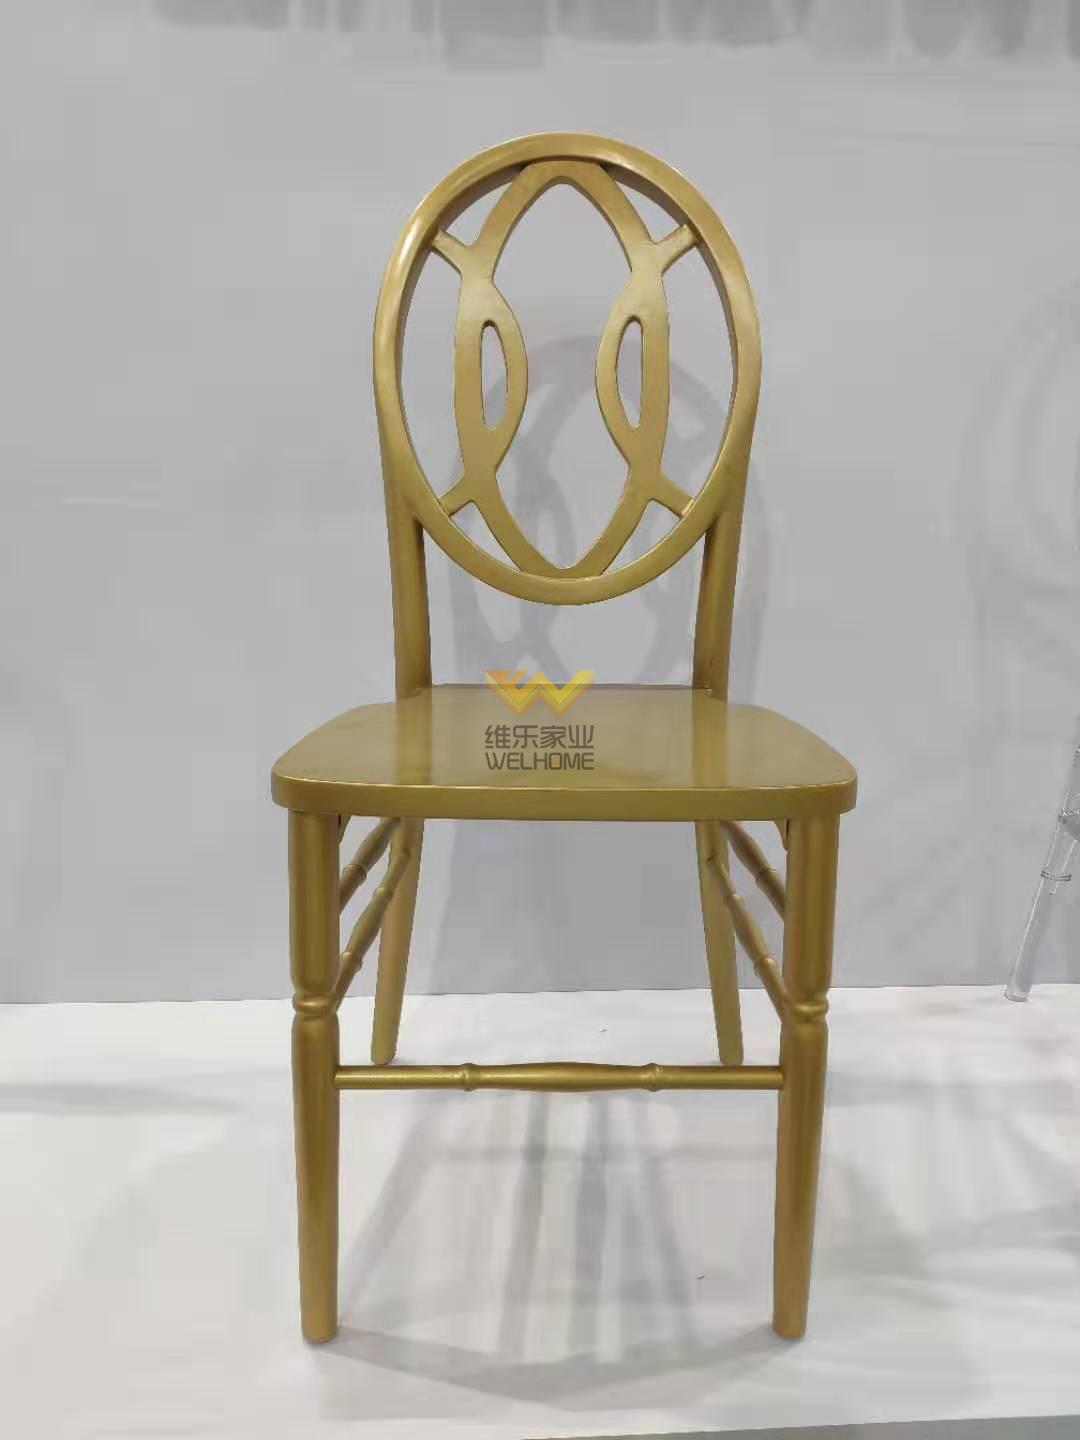 Soild wood phoenix chair for event/restaurant